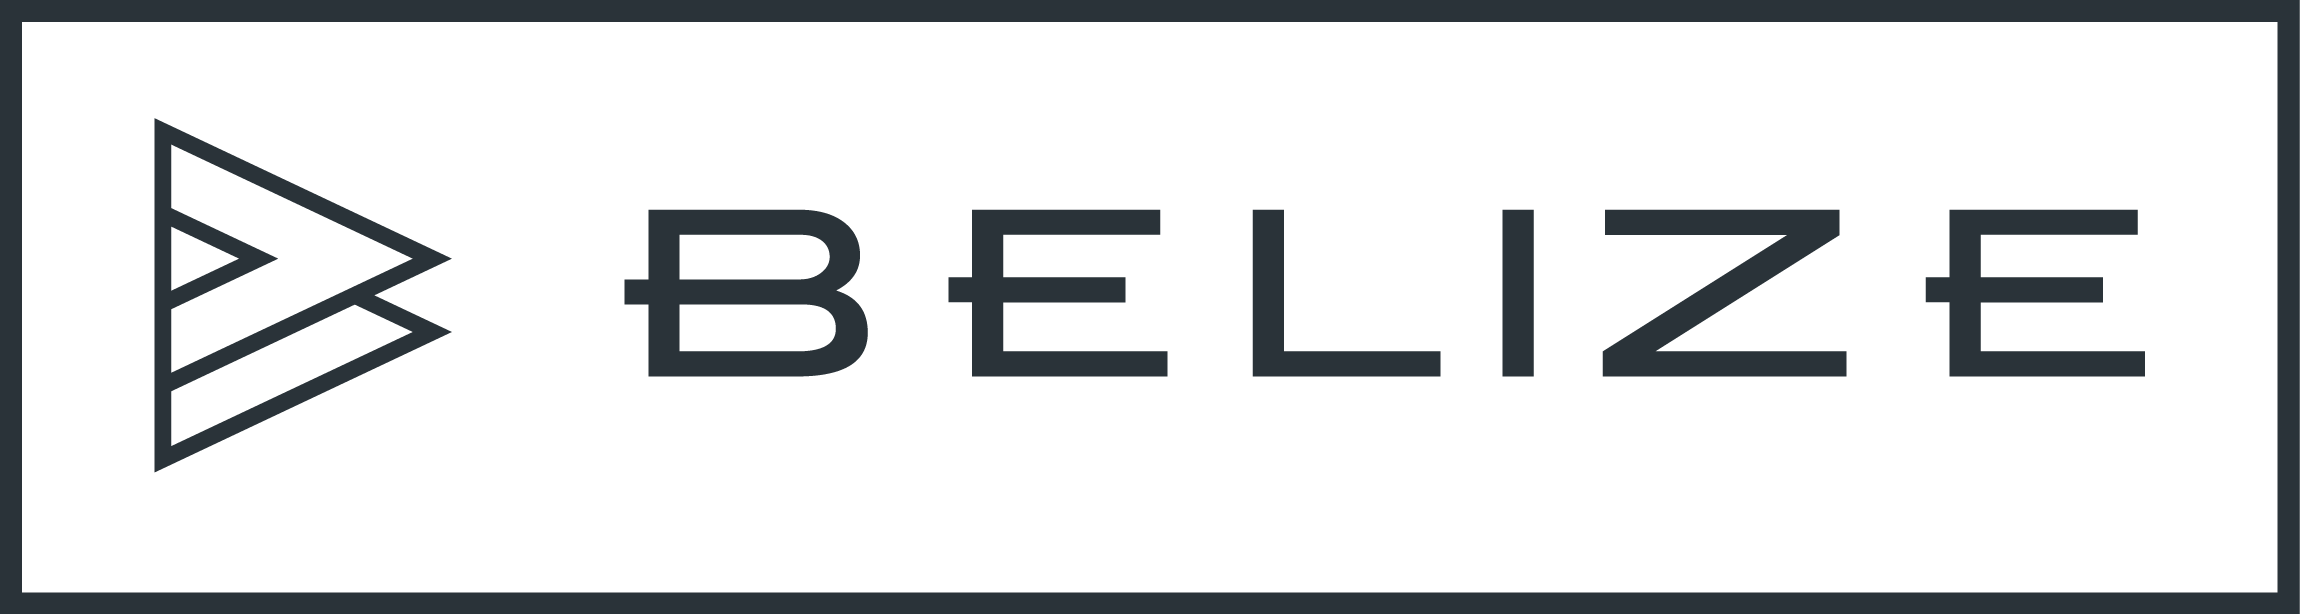 Belize brand logo